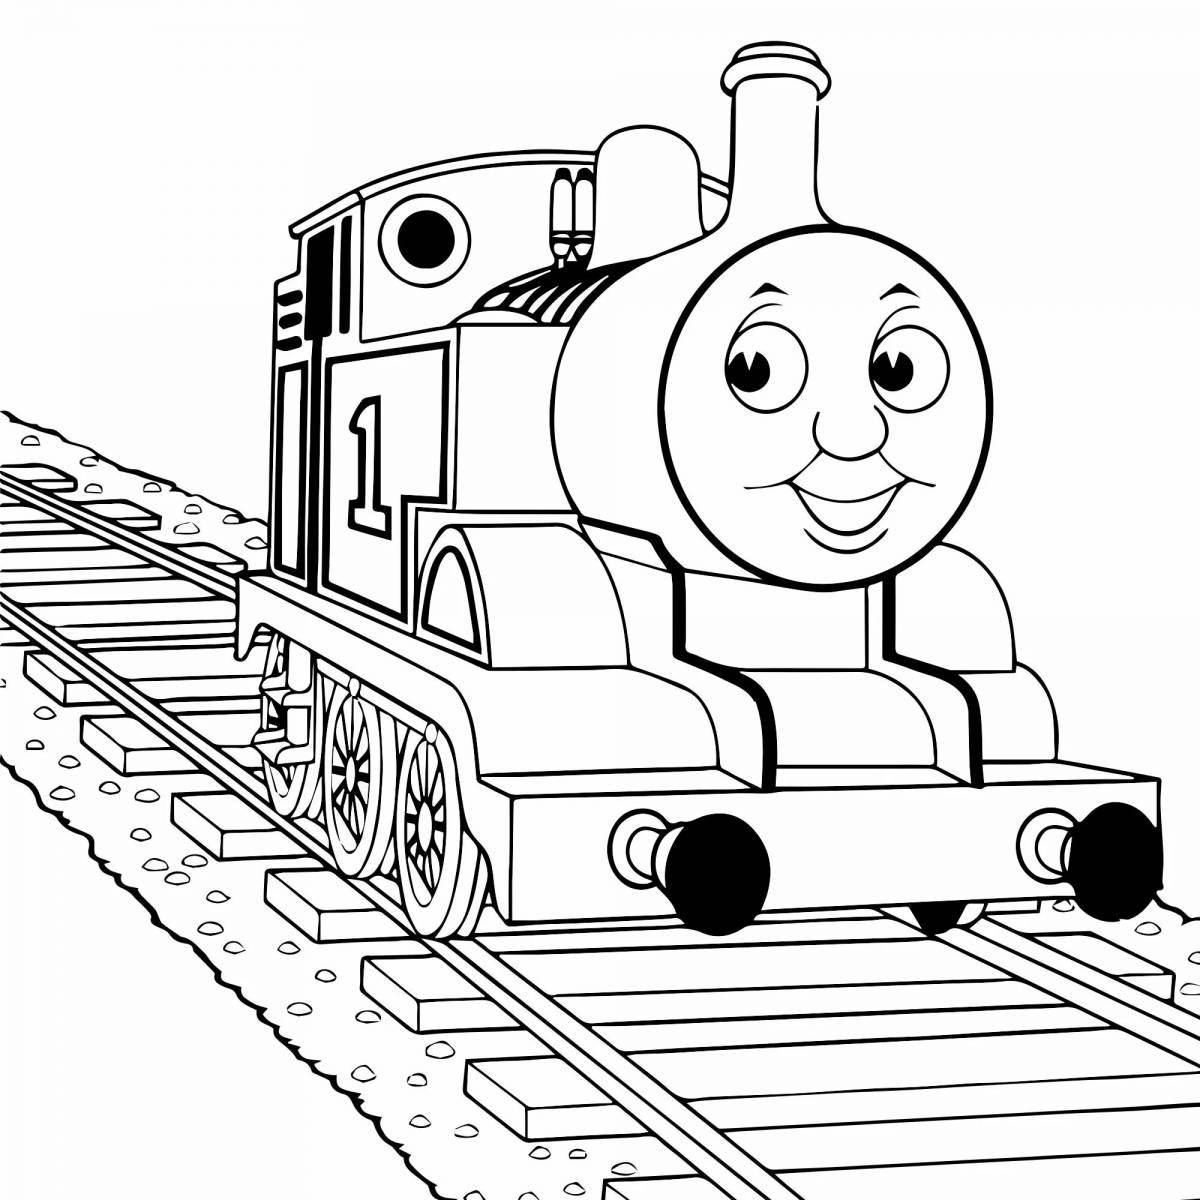 Impressive steam locomotive coloring page